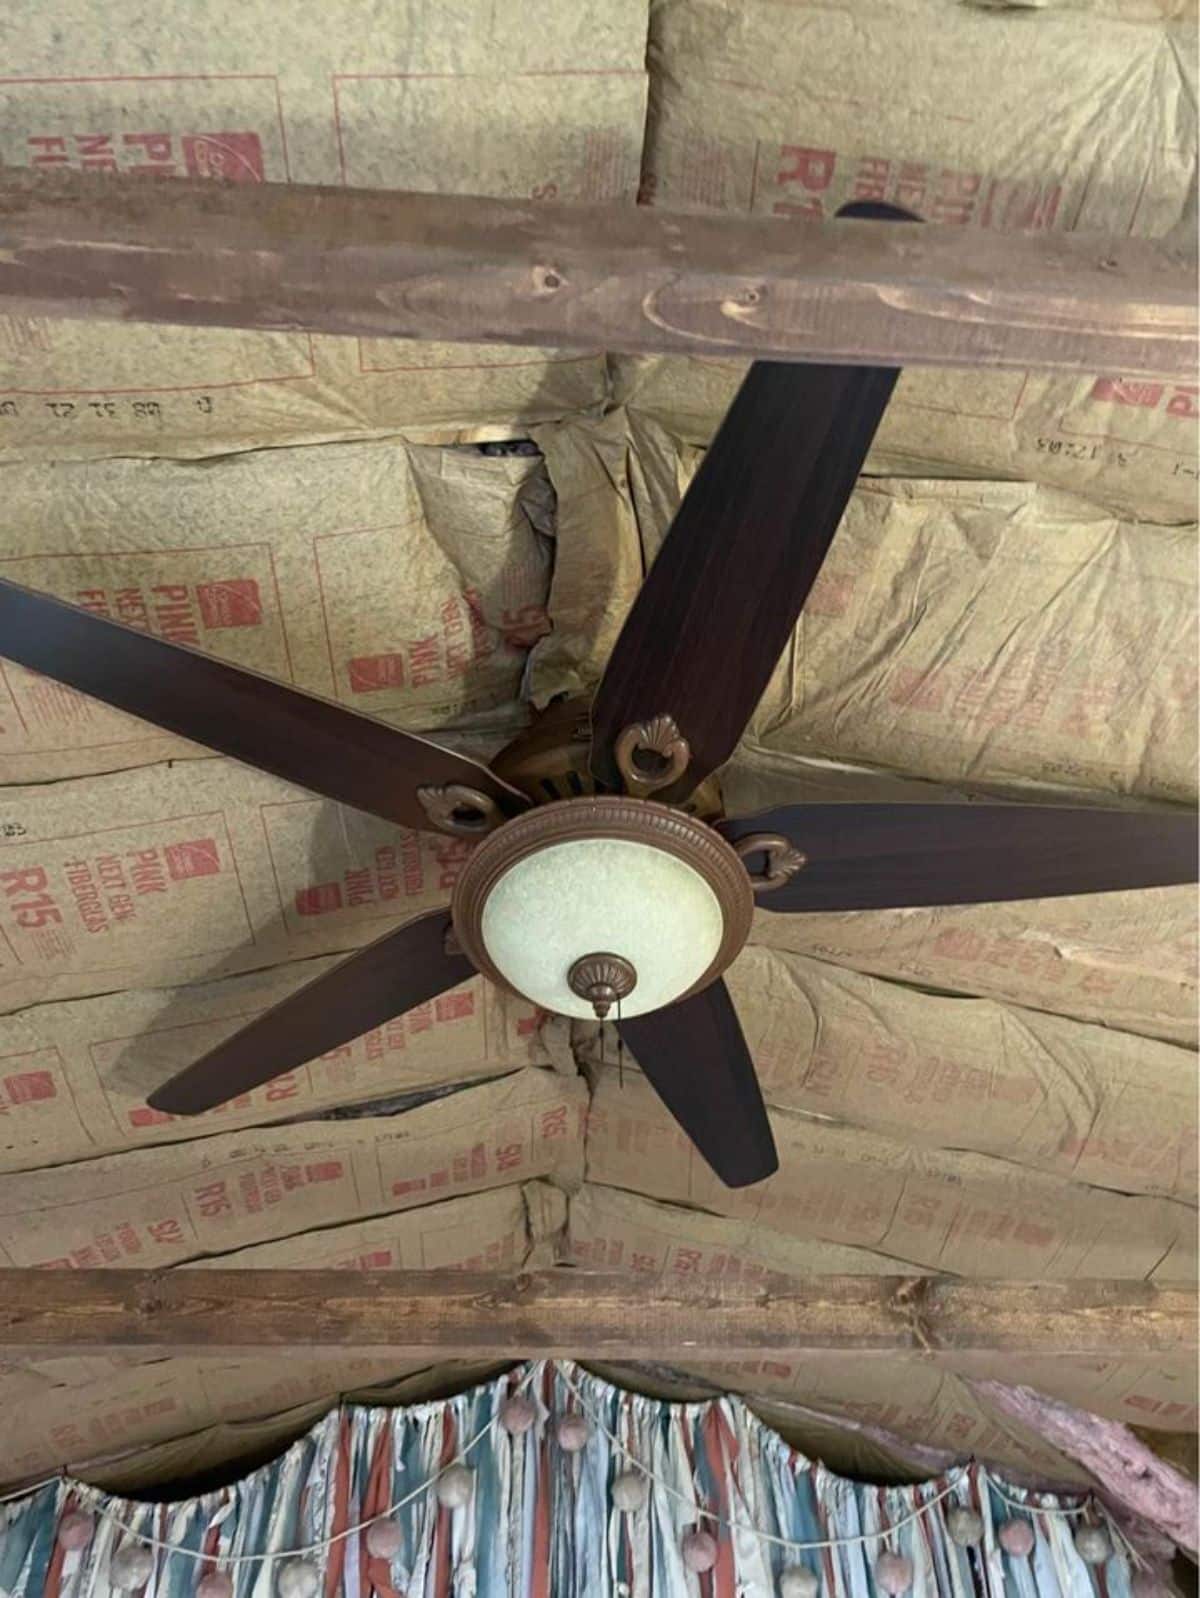 Huge fan for air circulation